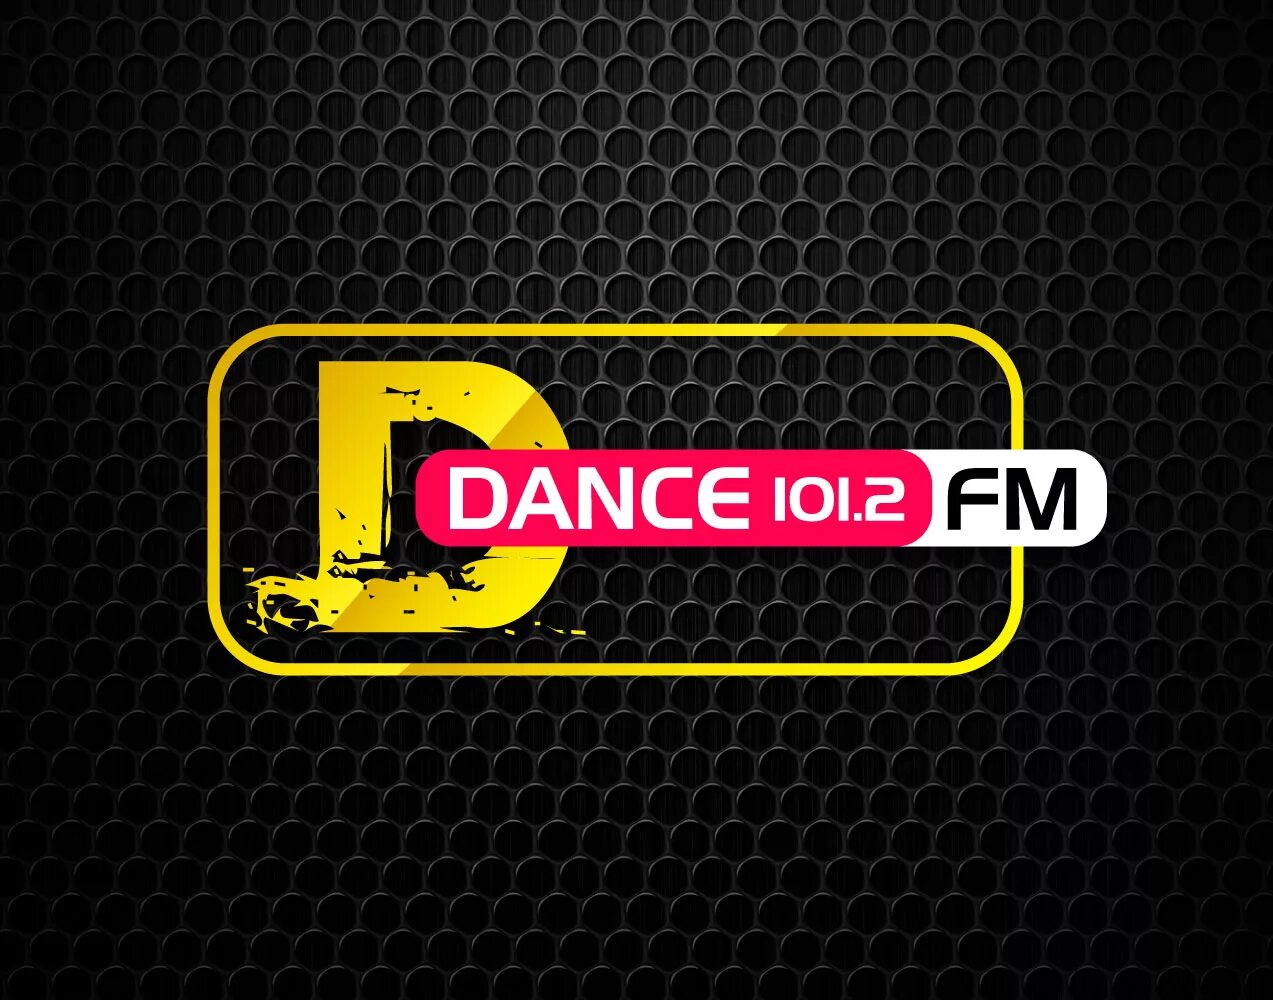 DFM логотип. Логотипы радиостанций ди ФМ. DFM радио лого. Реклама DFM 101.2. Радио фм воркута